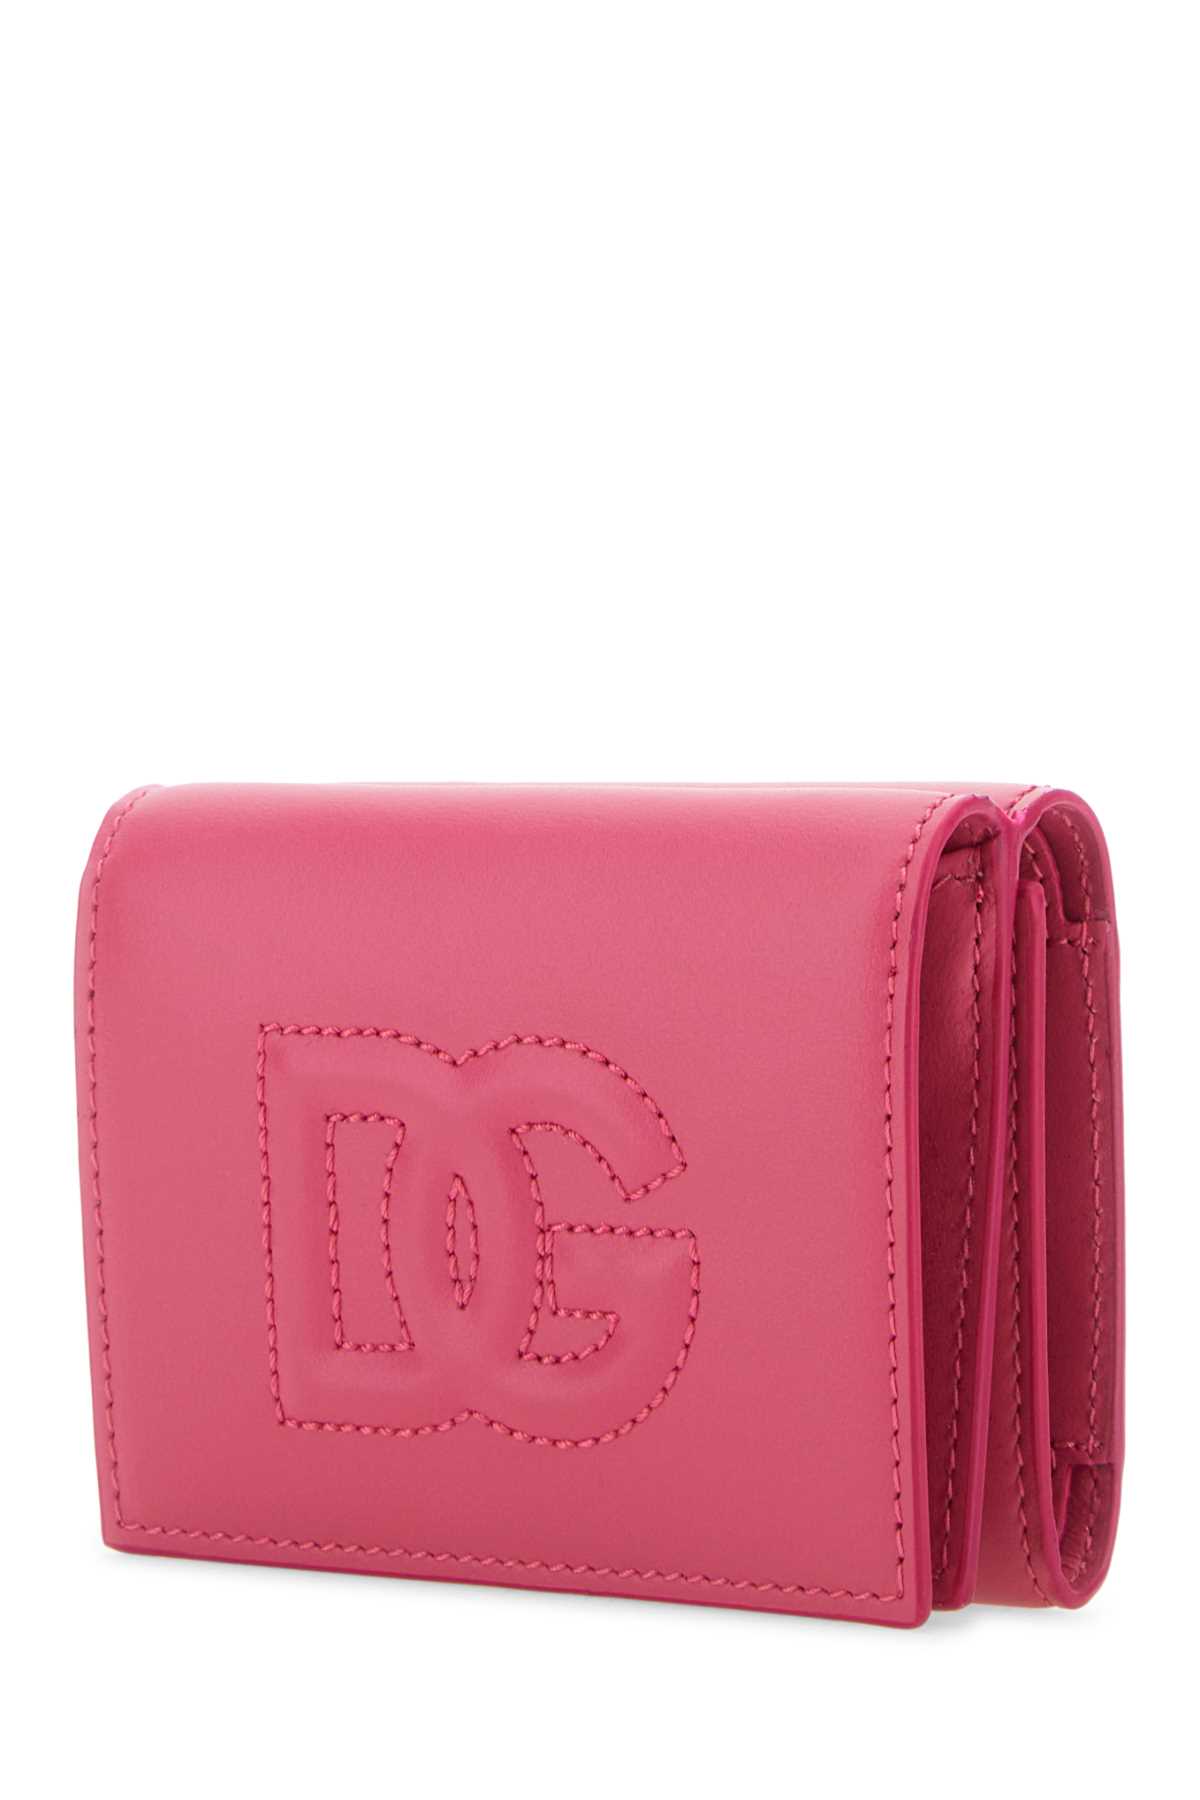 Dolce & Gabbana Fuchsia Leather Wallet In Glicine